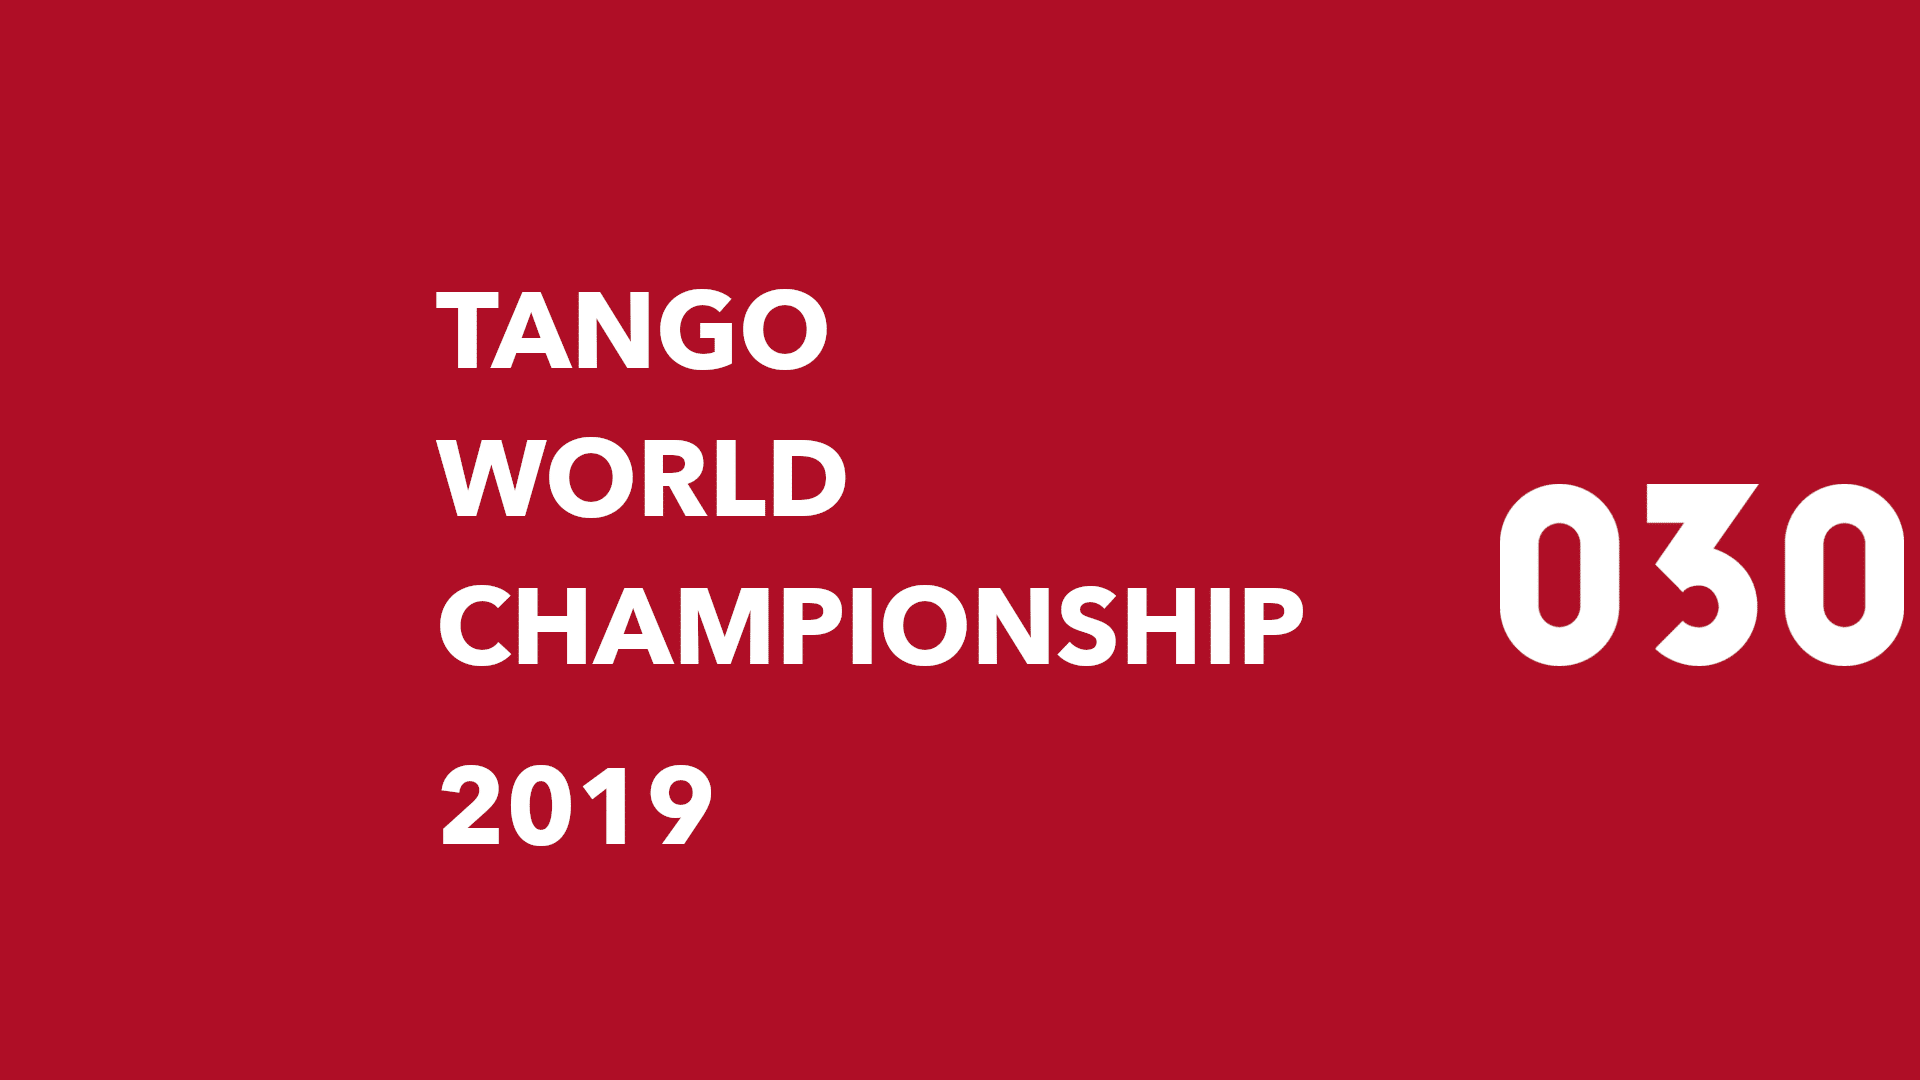 Tango World Championship 2019 event picture